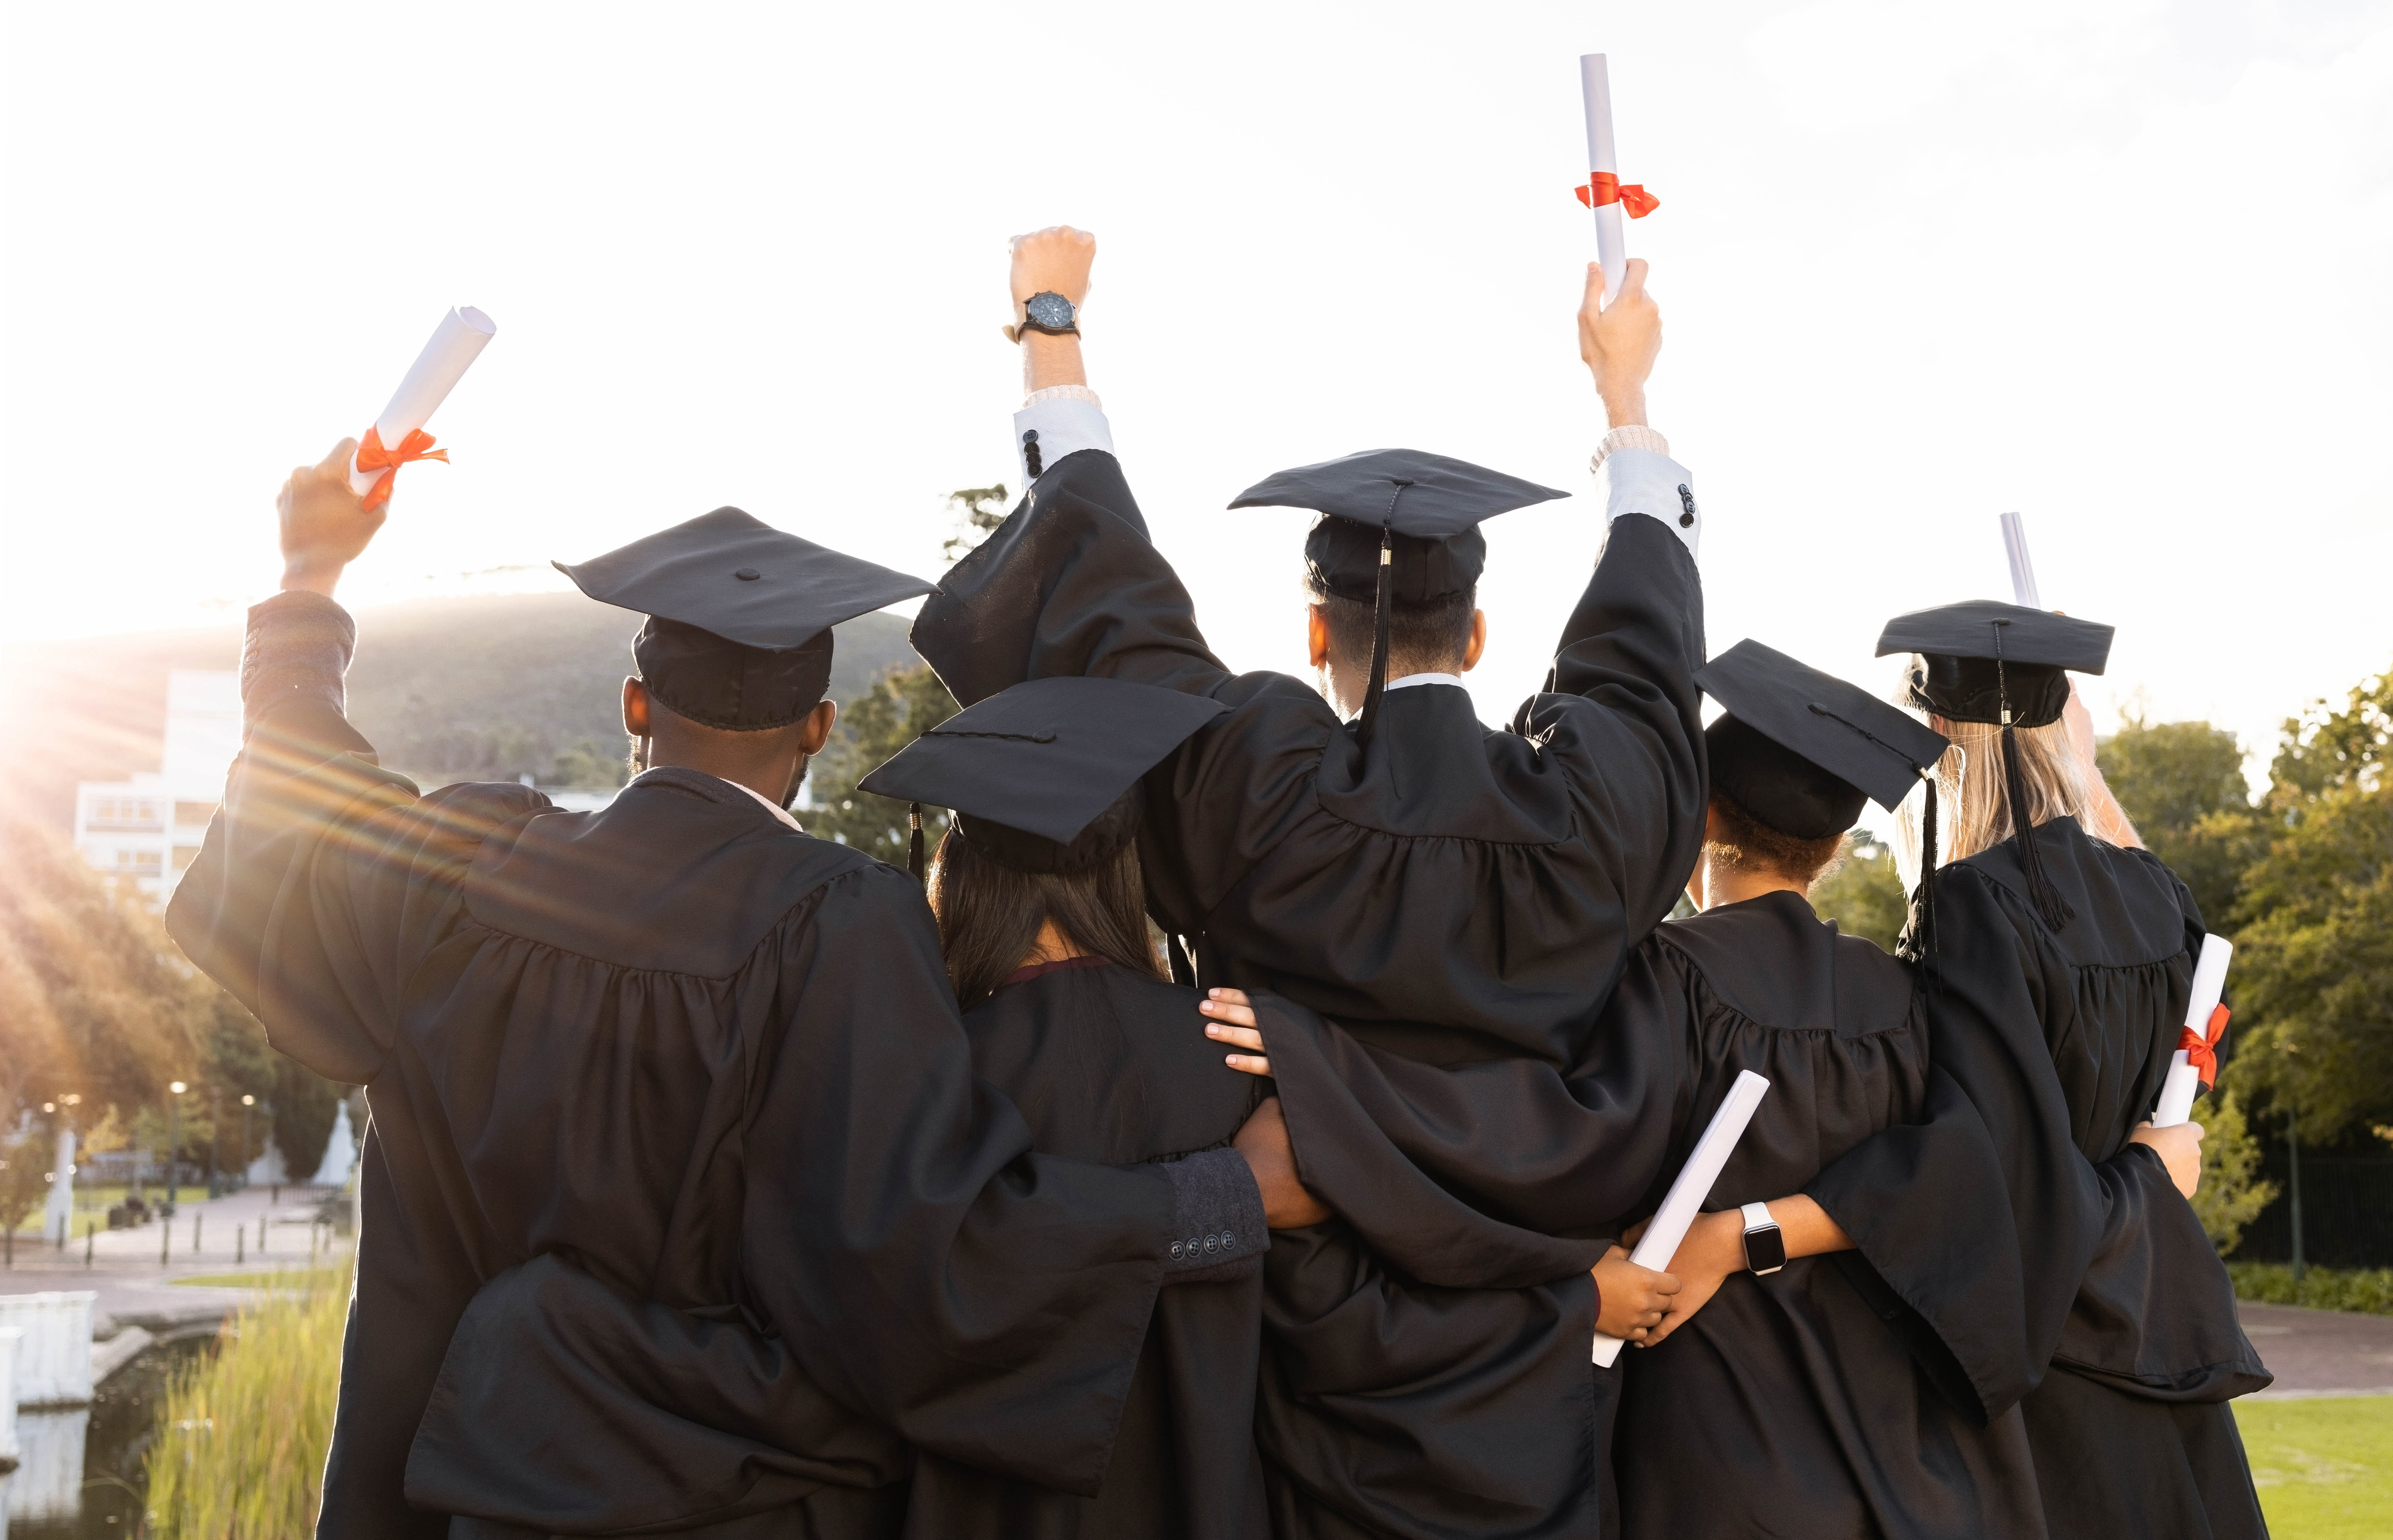 Graduates in caps and gowns, raising diplomas, embracing, celebrating achievement